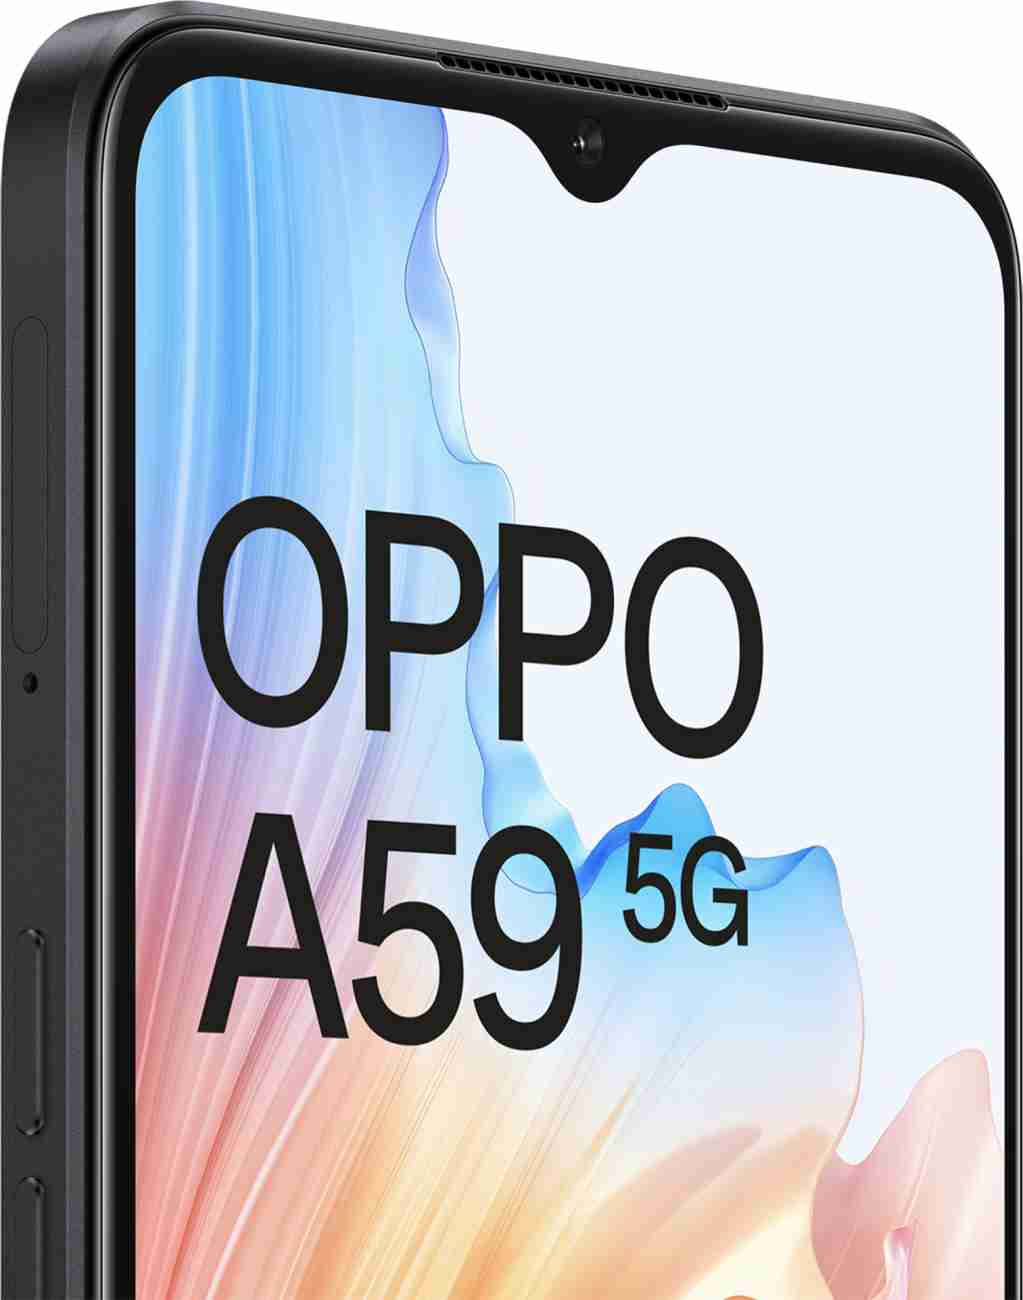 OPPO A59 5G ( 128 GB ROM, 4 GB RAM ) Online at Best Price On Flipkart.com